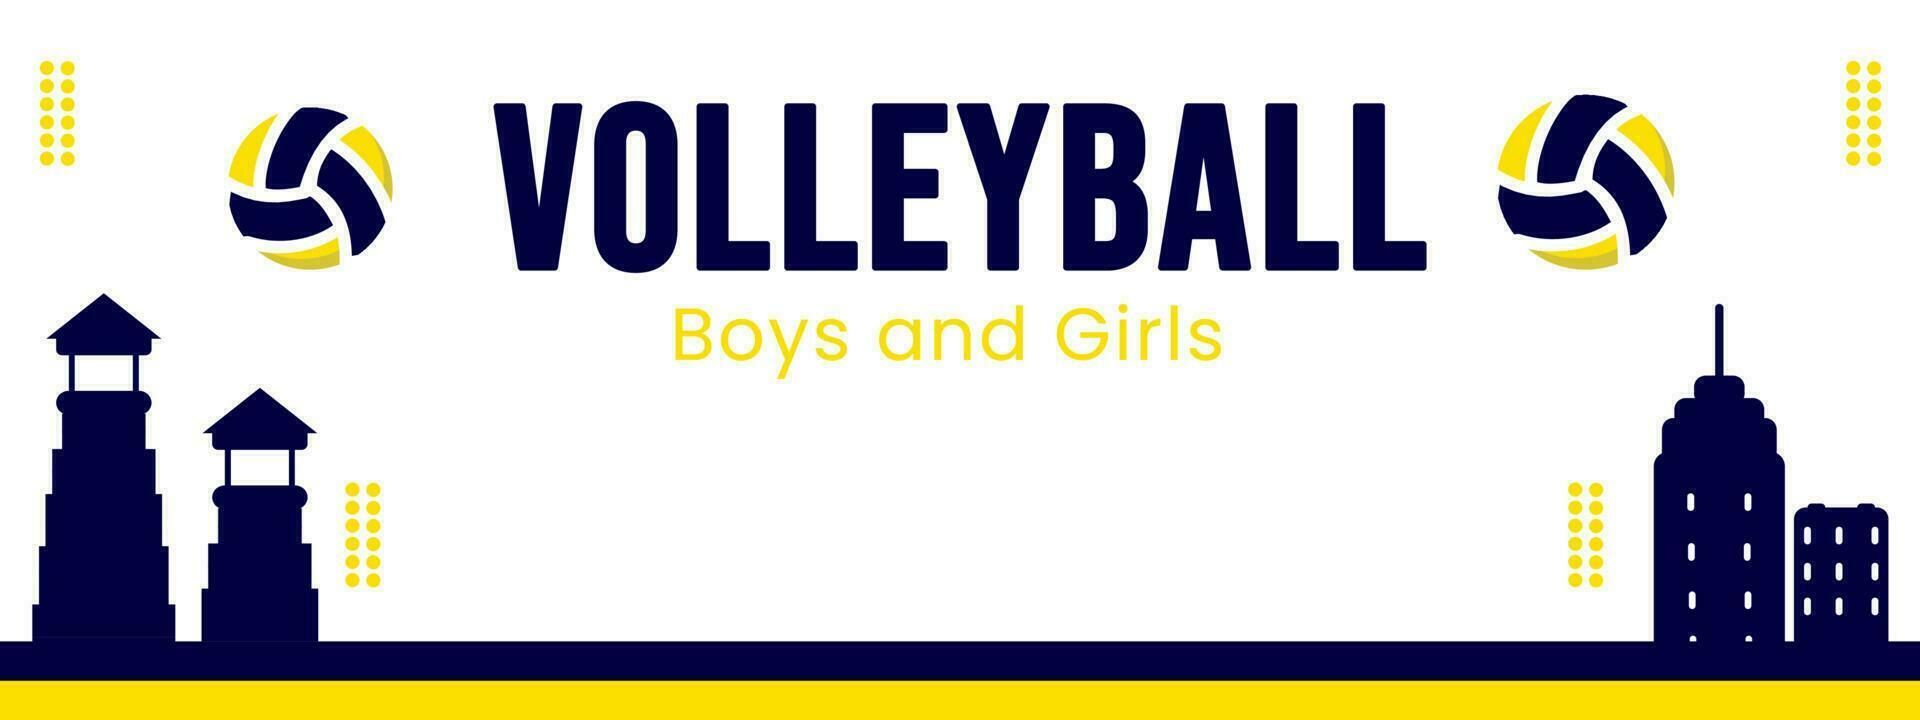 Mannen en vrouwen club volleybal banners vector